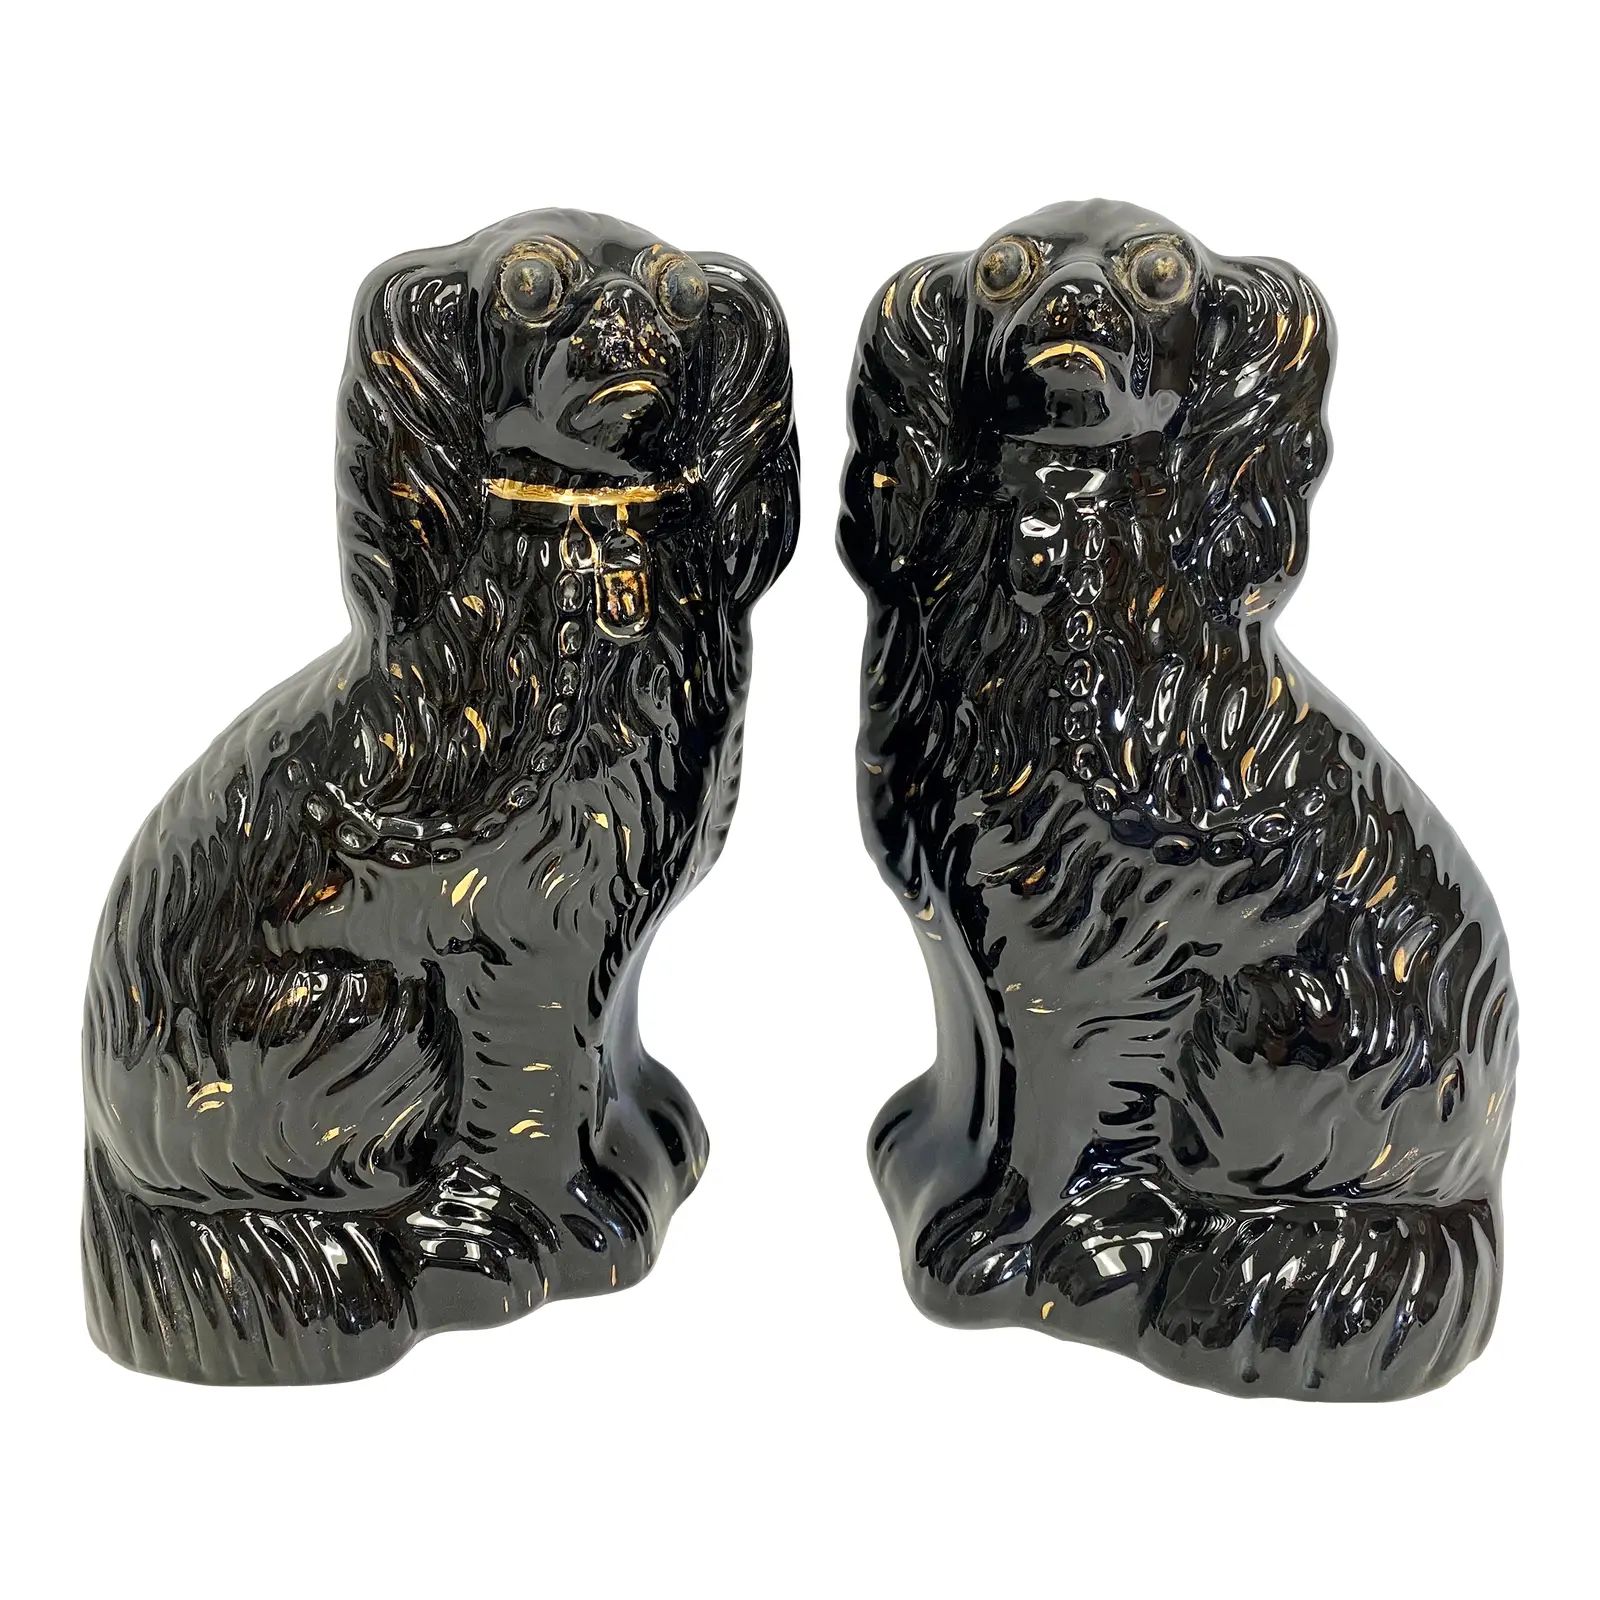 Antique Pair of Black Staffordshire King Charles Spaniel Dog Figurines From England - Circa 19th ... | Chairish